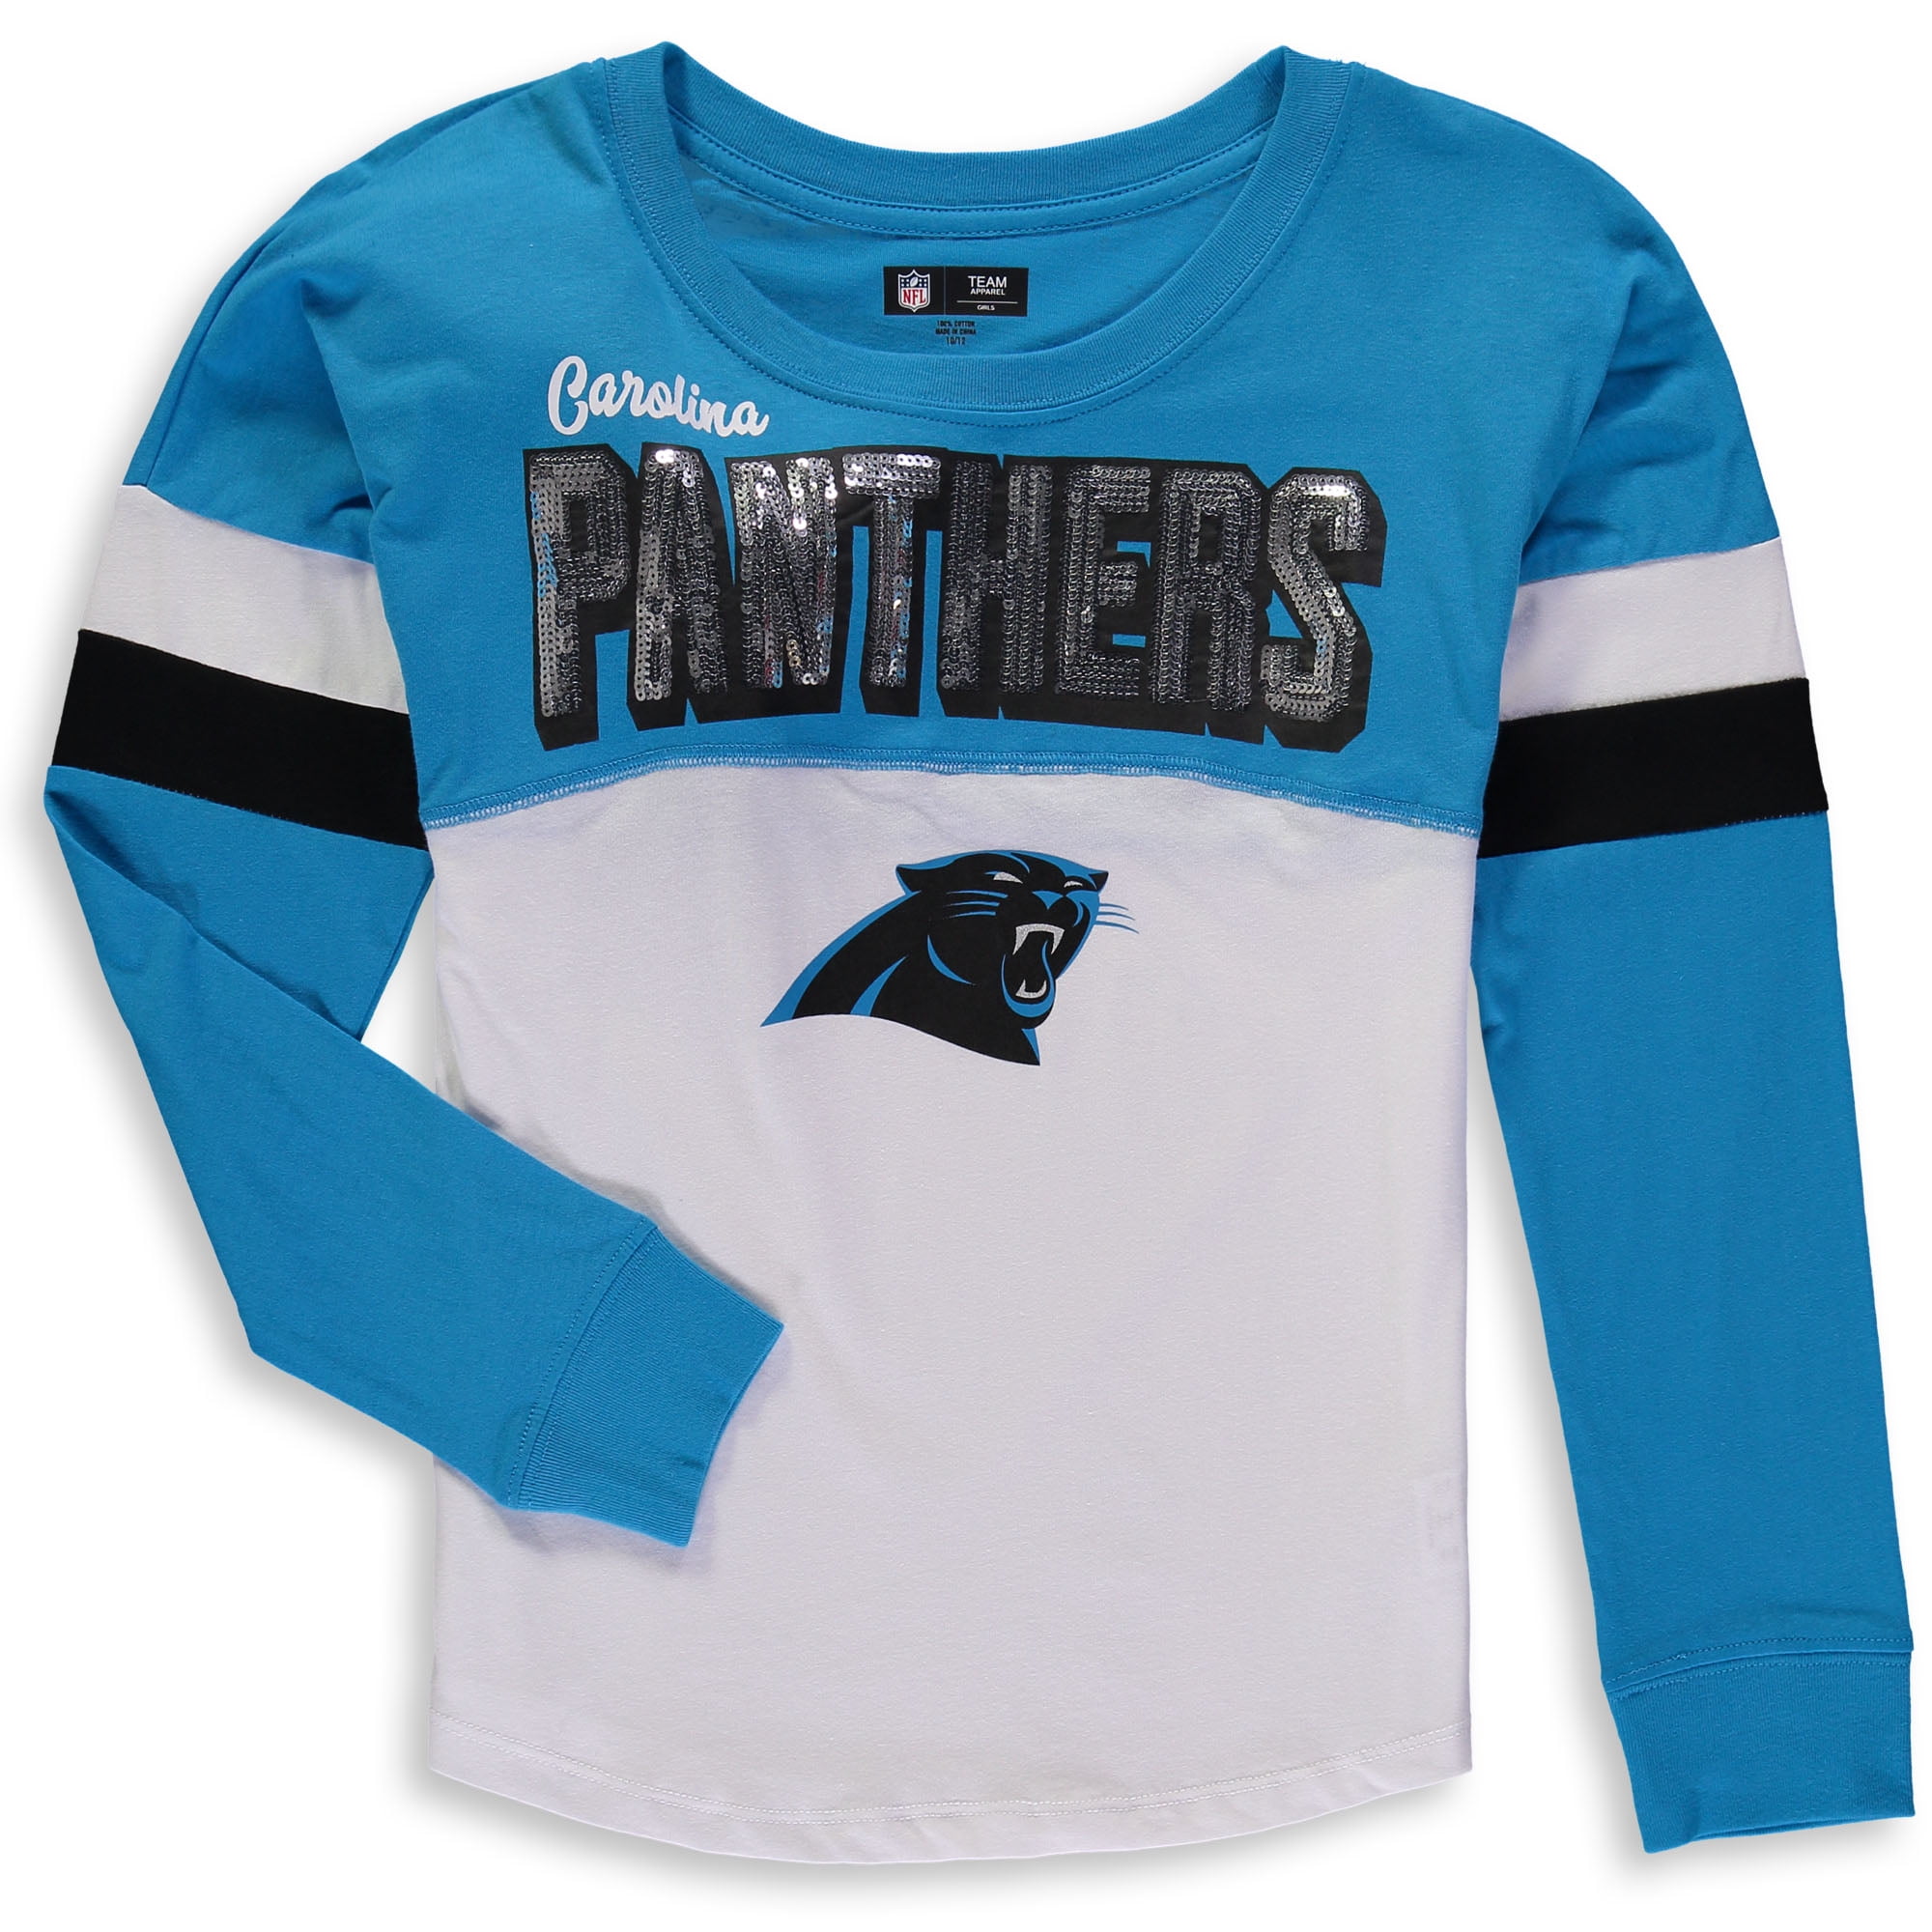 panthers girls jersey